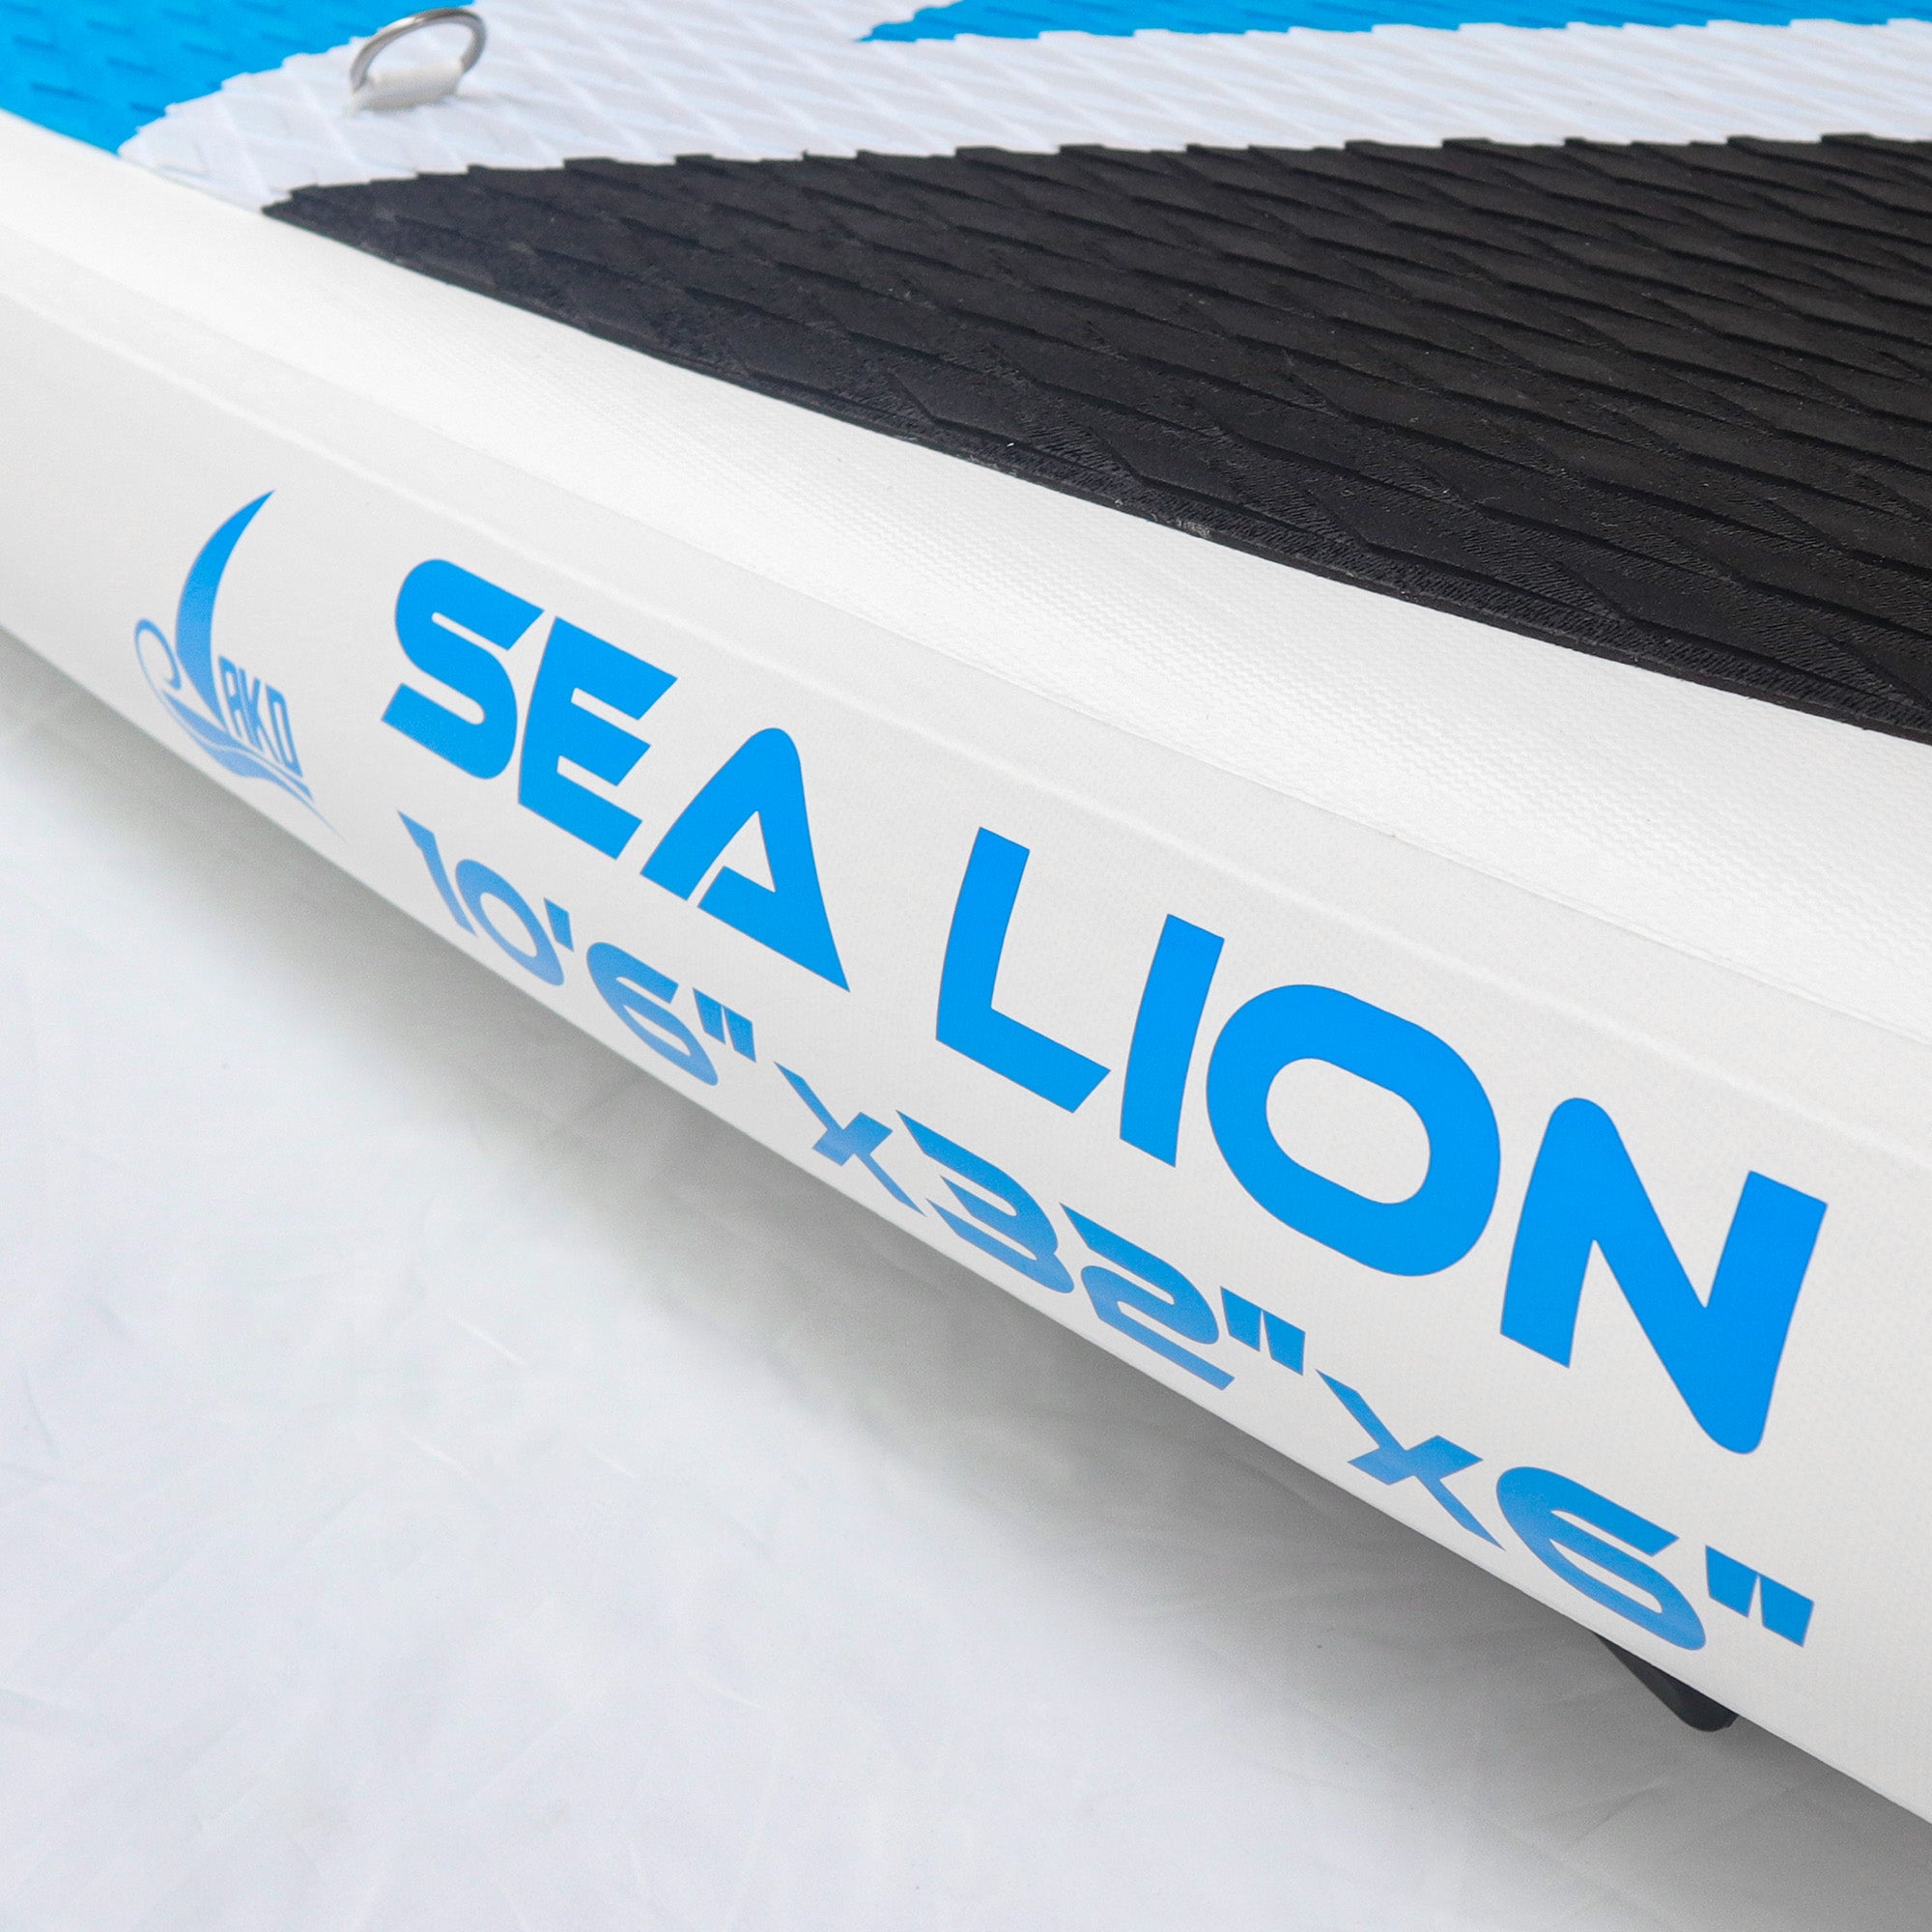 AKD SeaLion Stand Up Paddle Board 10'6" XL 320x86x15cm SUP Board 160kg/337L (Blue)